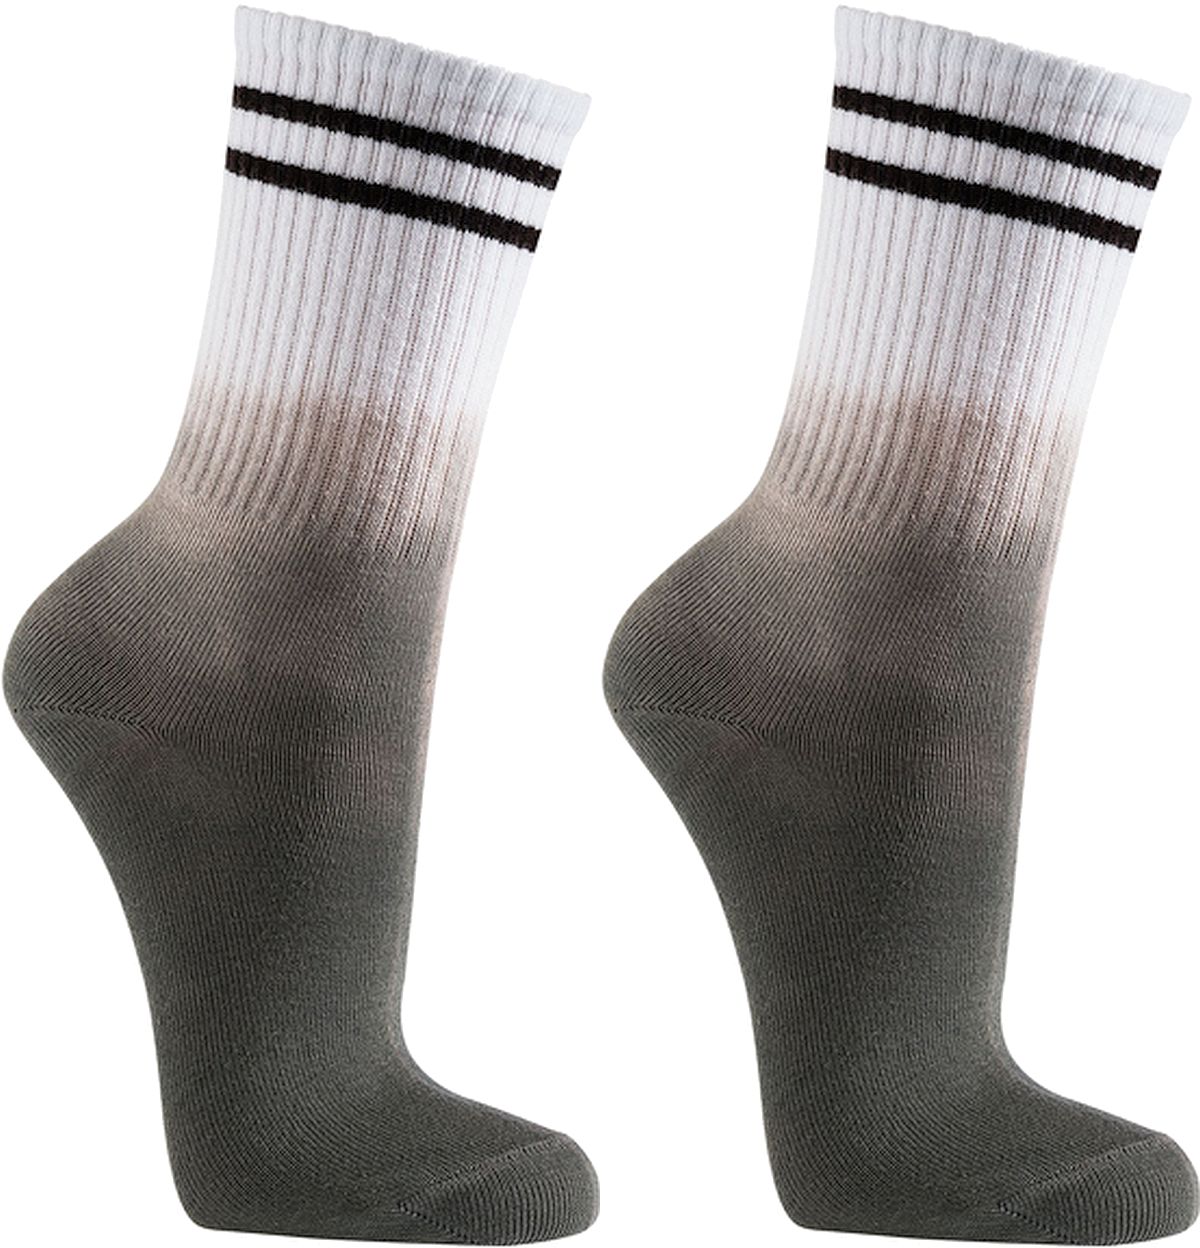  Crew Socks Socken Batik für Teenager, Damen und Herren 2 Paar/ 1 Dessin